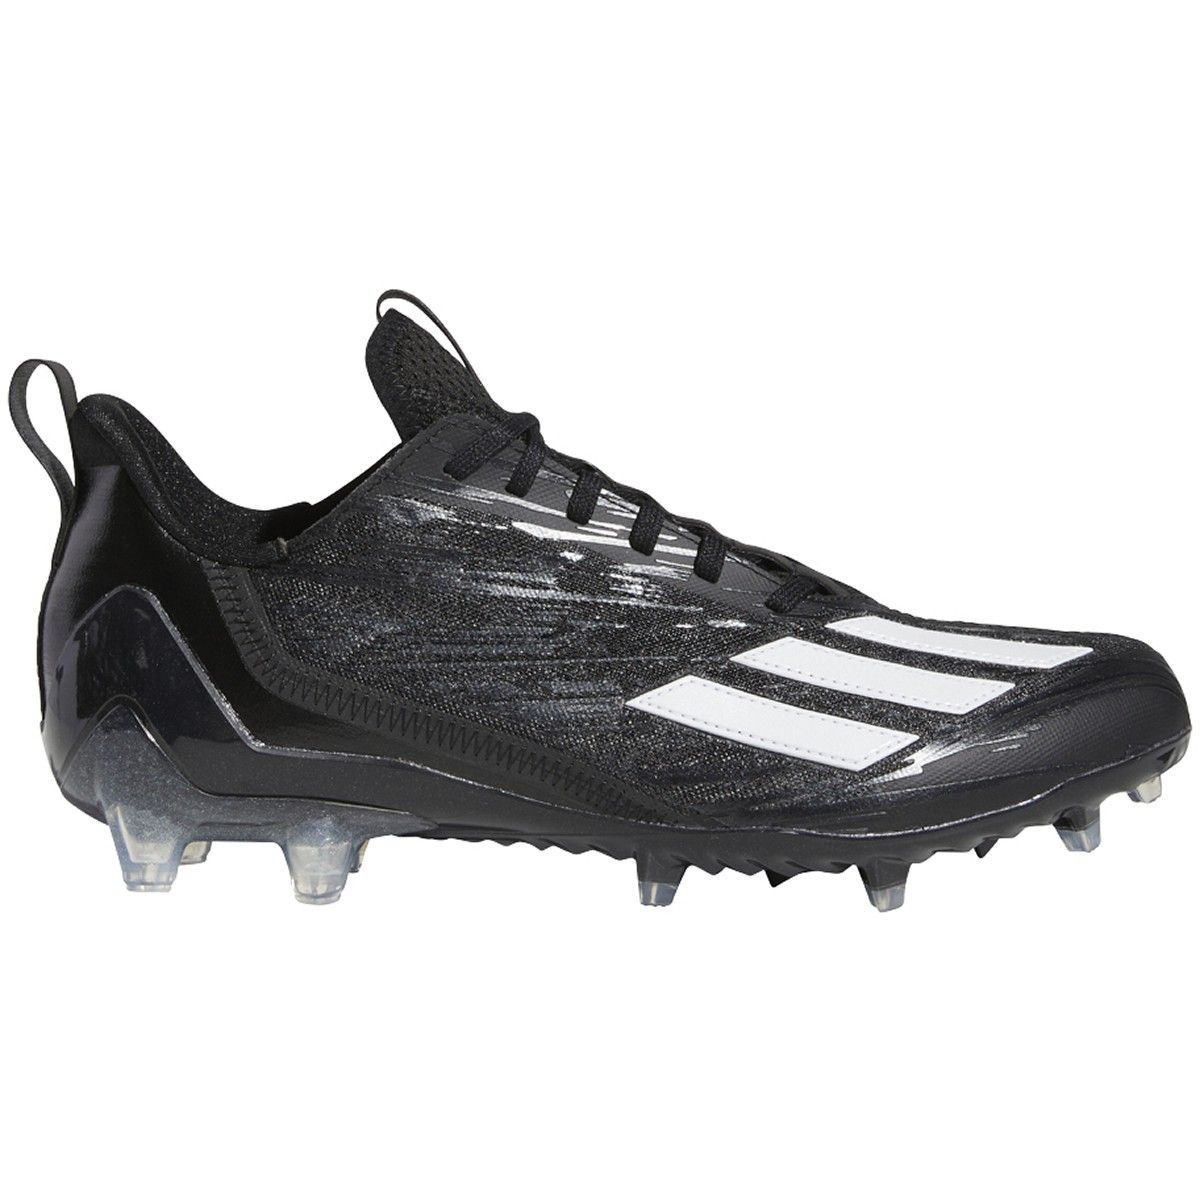 adidas Adizero Football Cleats in Black and White GX4050